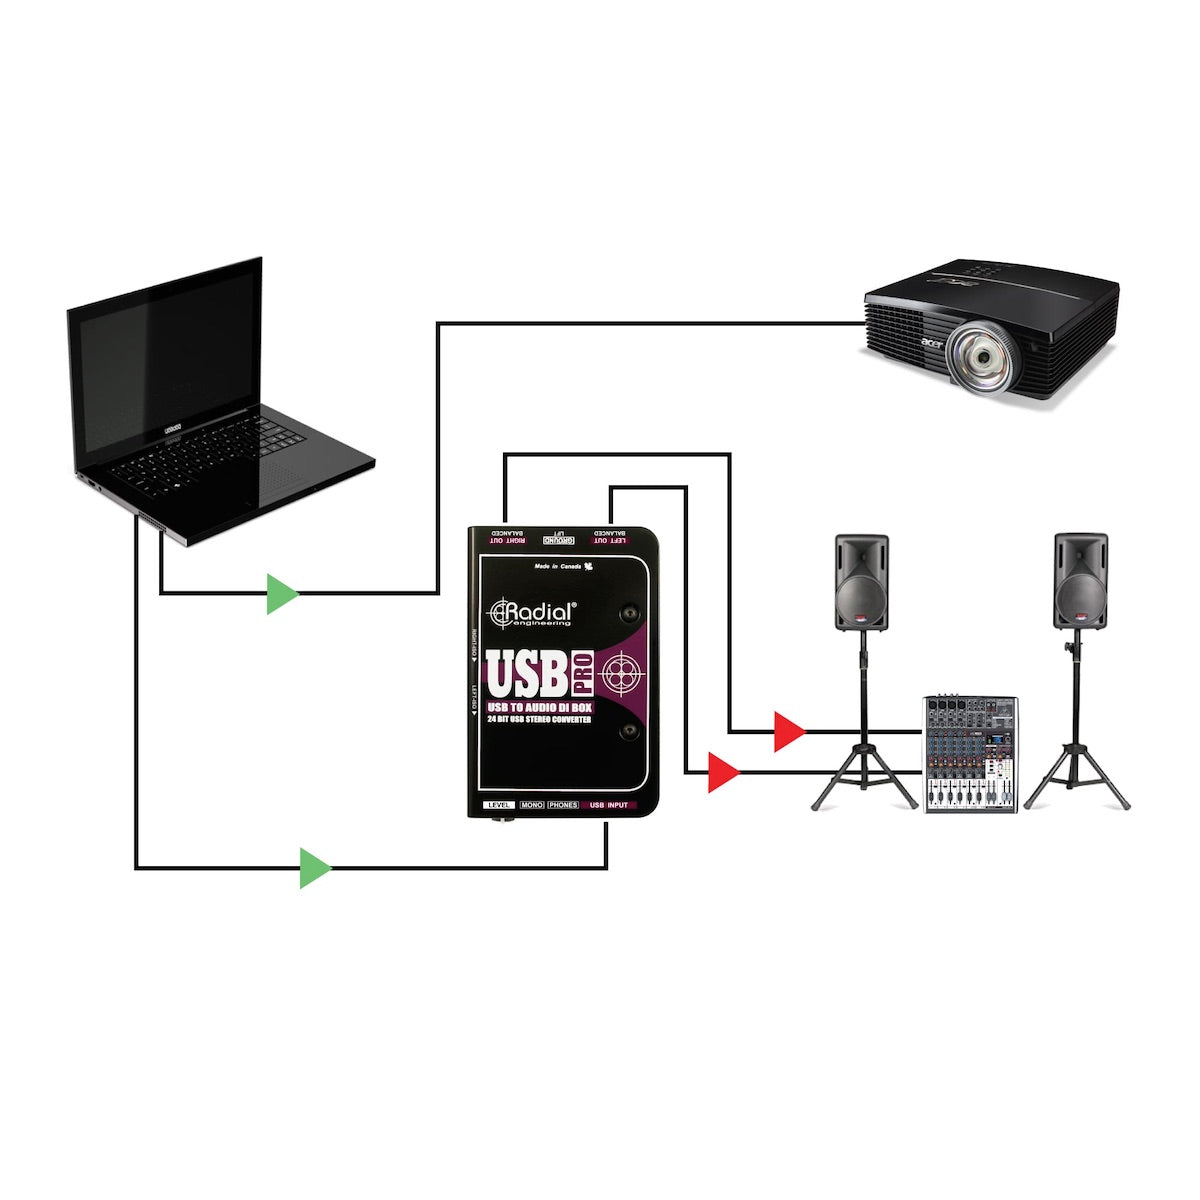 Radial USB-Pro - USB to Balanced XLR Stereo Direct Box for Laptops, presentation application